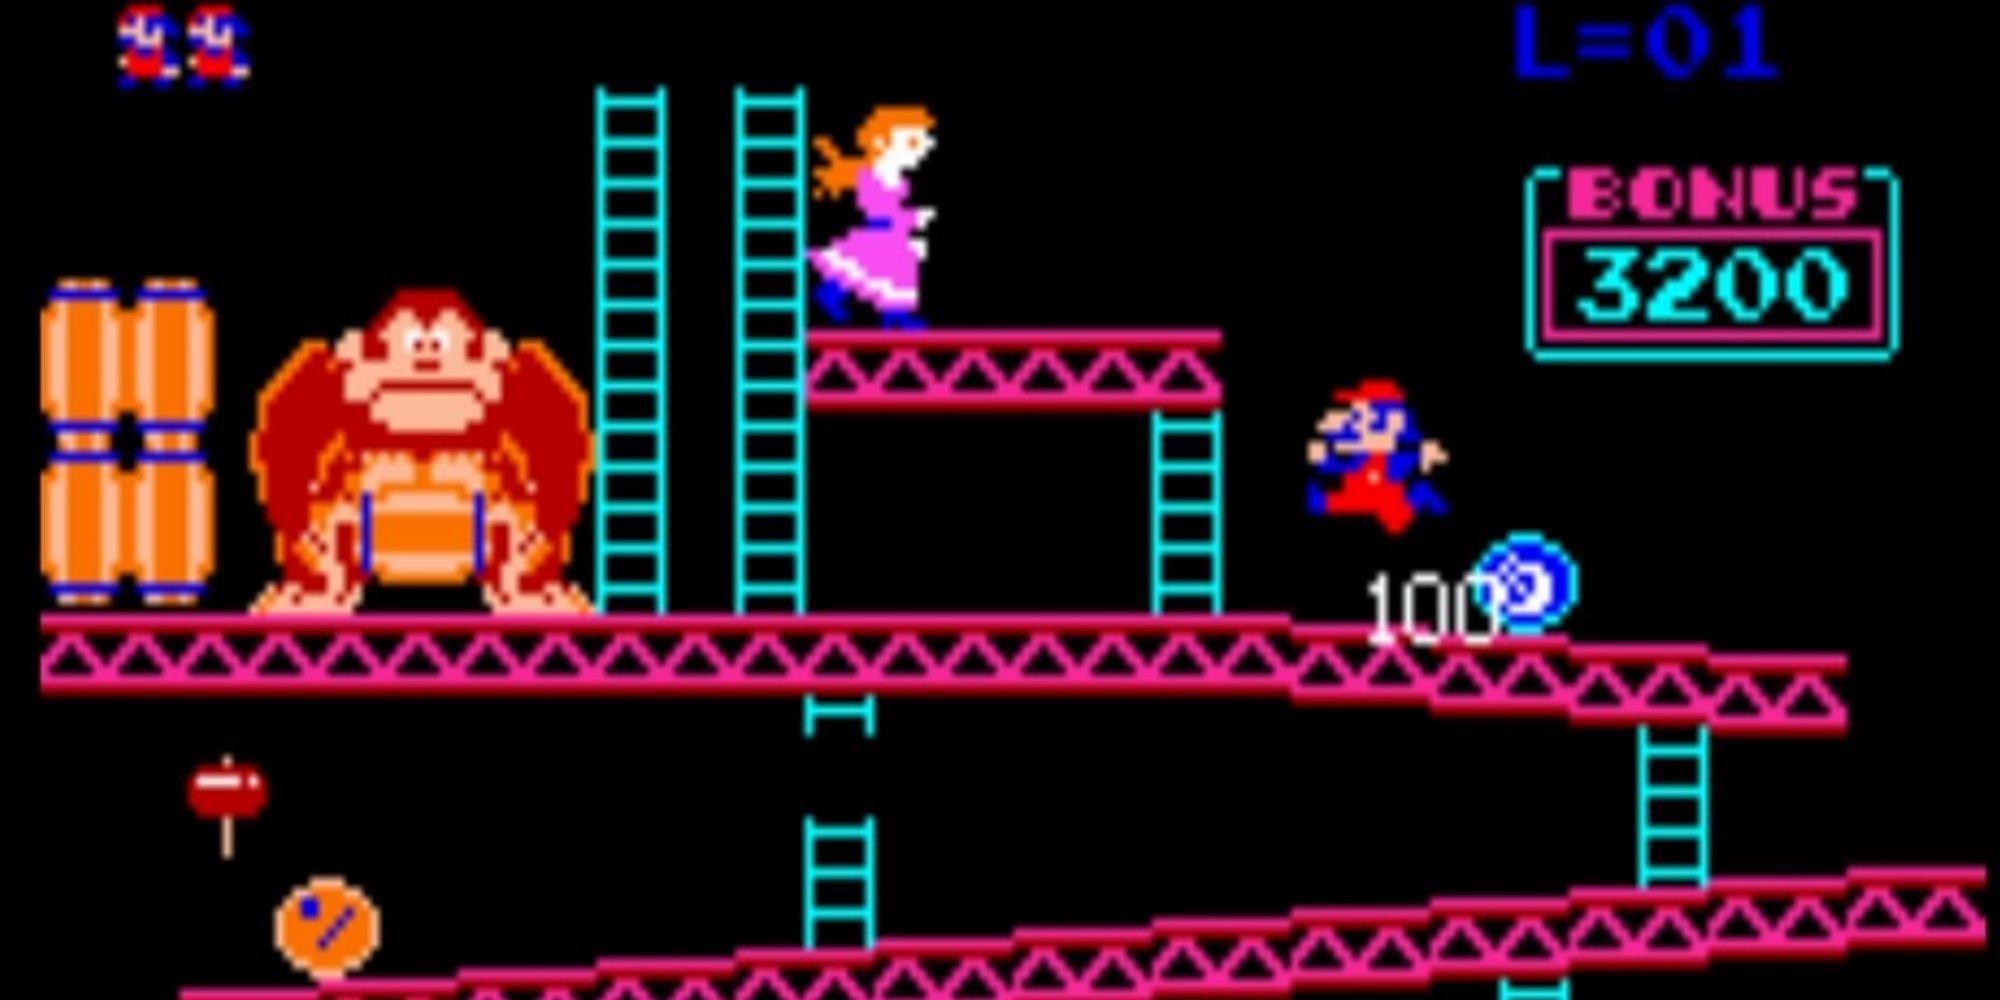 Jumpman reaching DK and Pauline in Donkey Kong